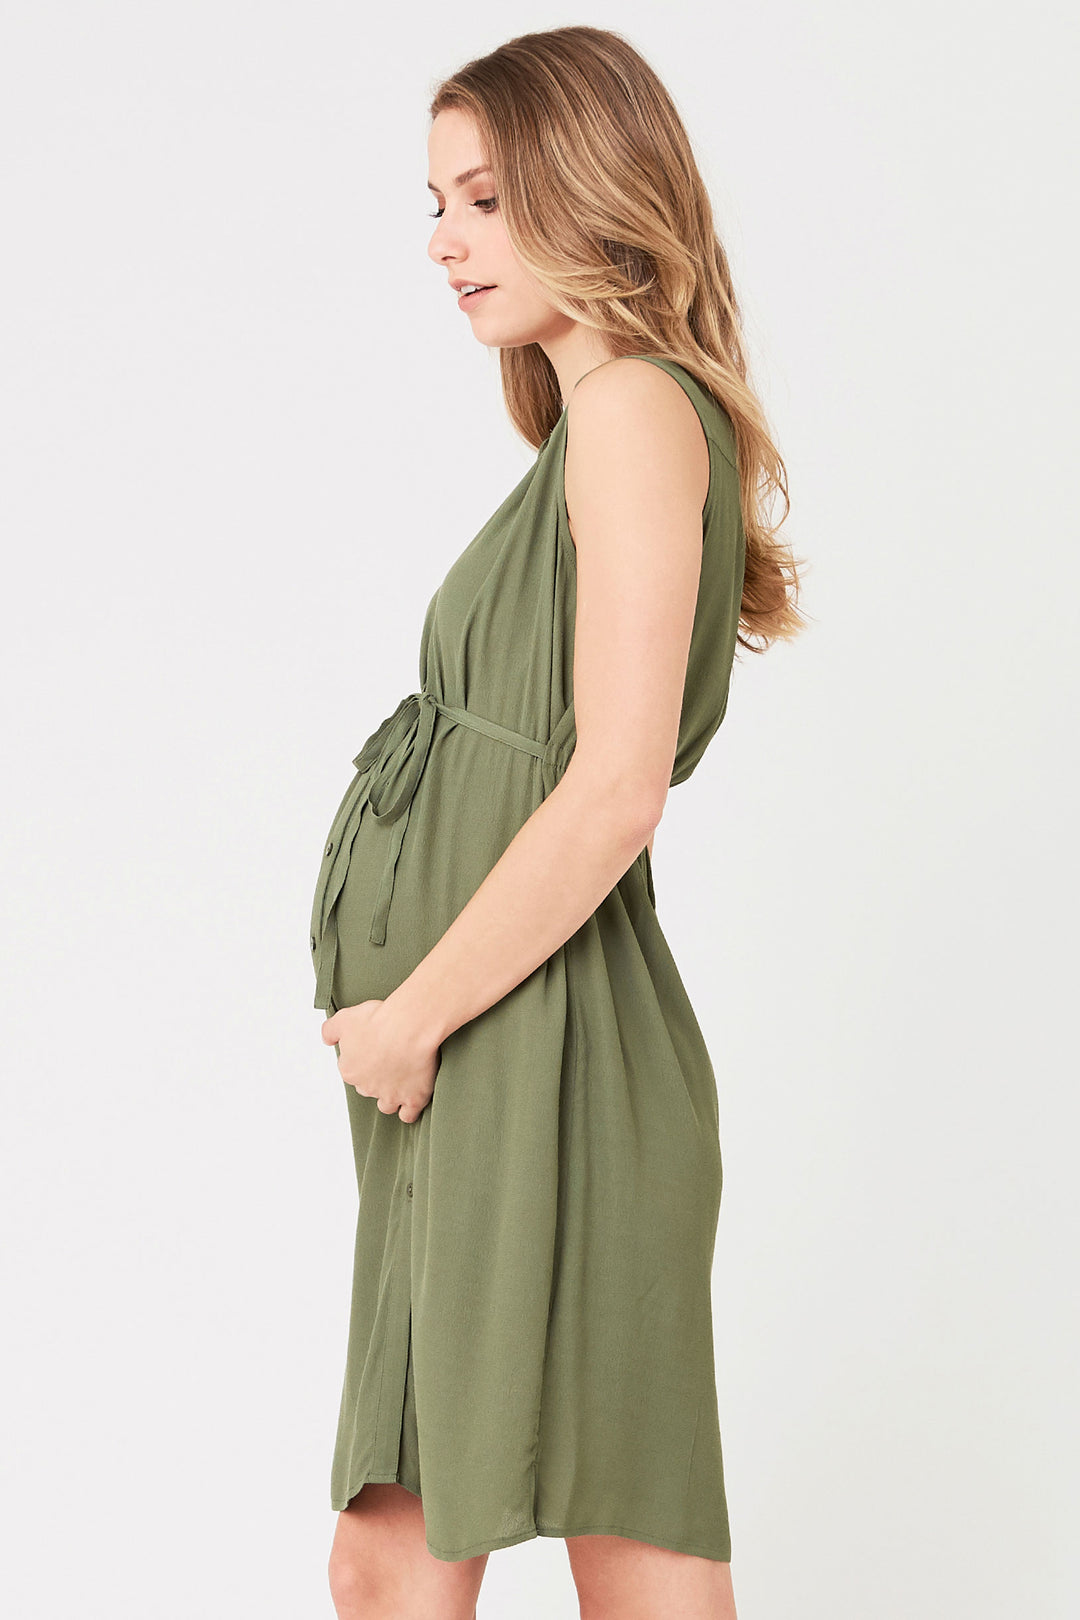 April Maternity Nursing Dress by Ripe